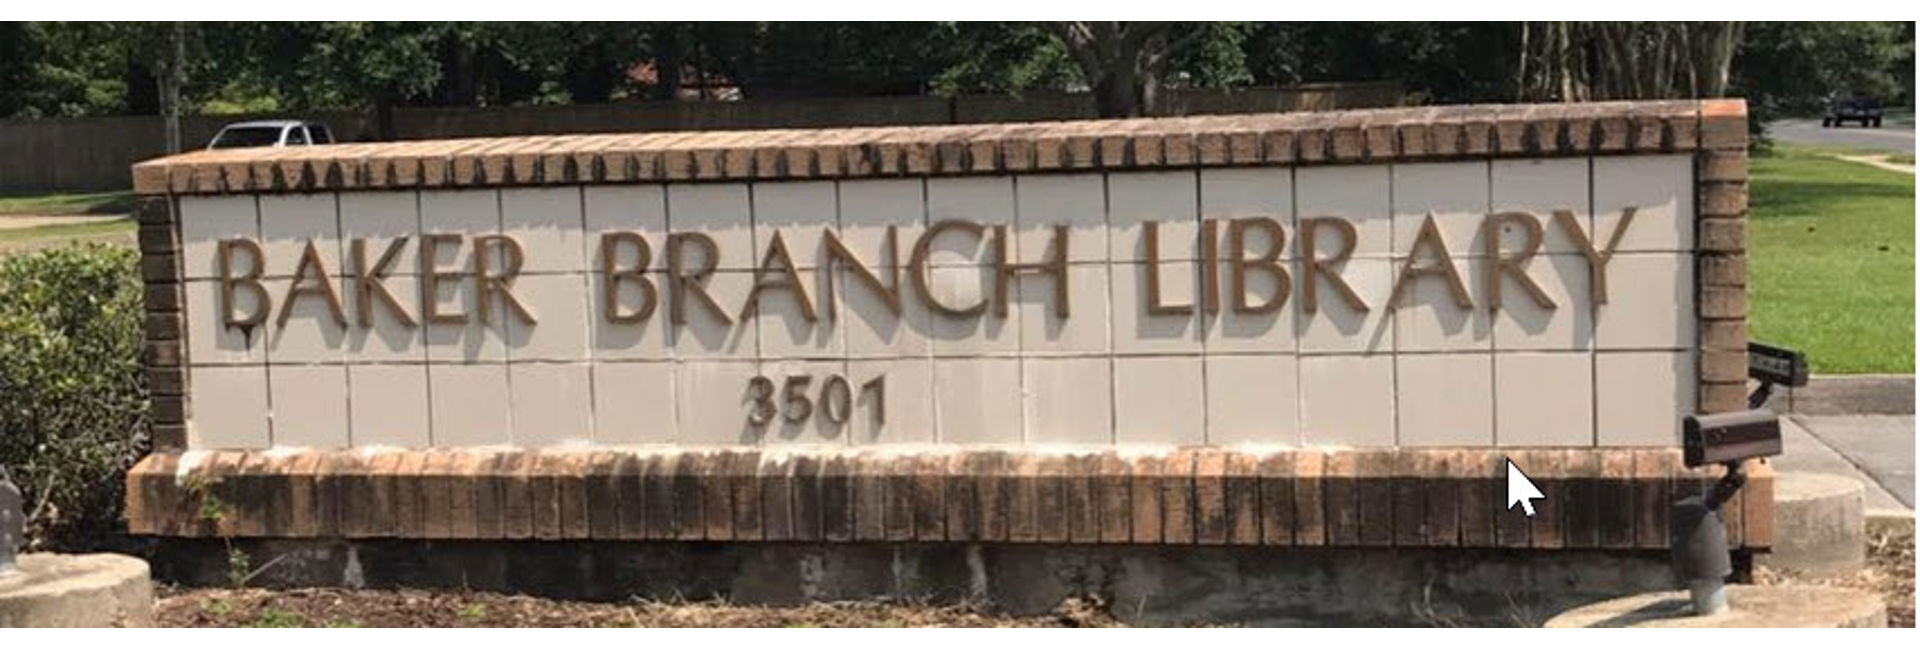 baker-branch-library